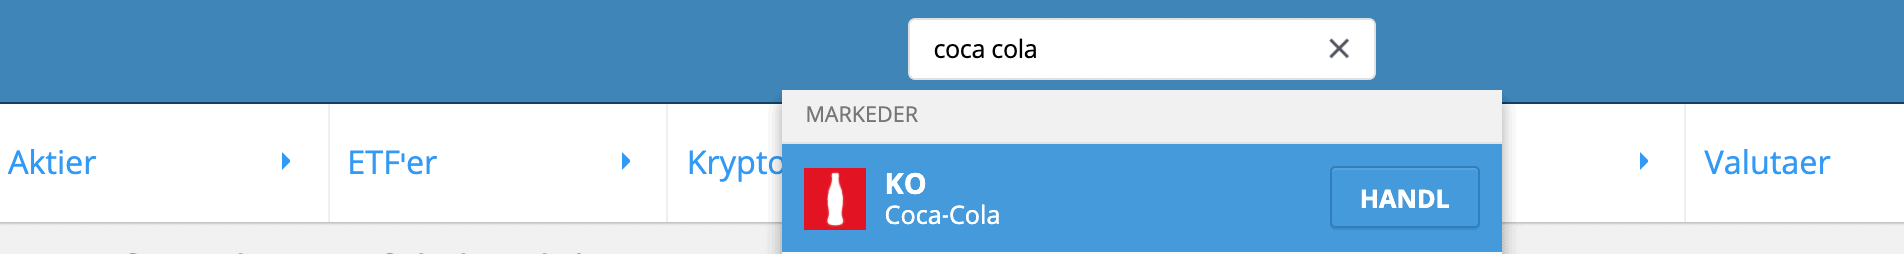 Soeg Coca Cola Aktier